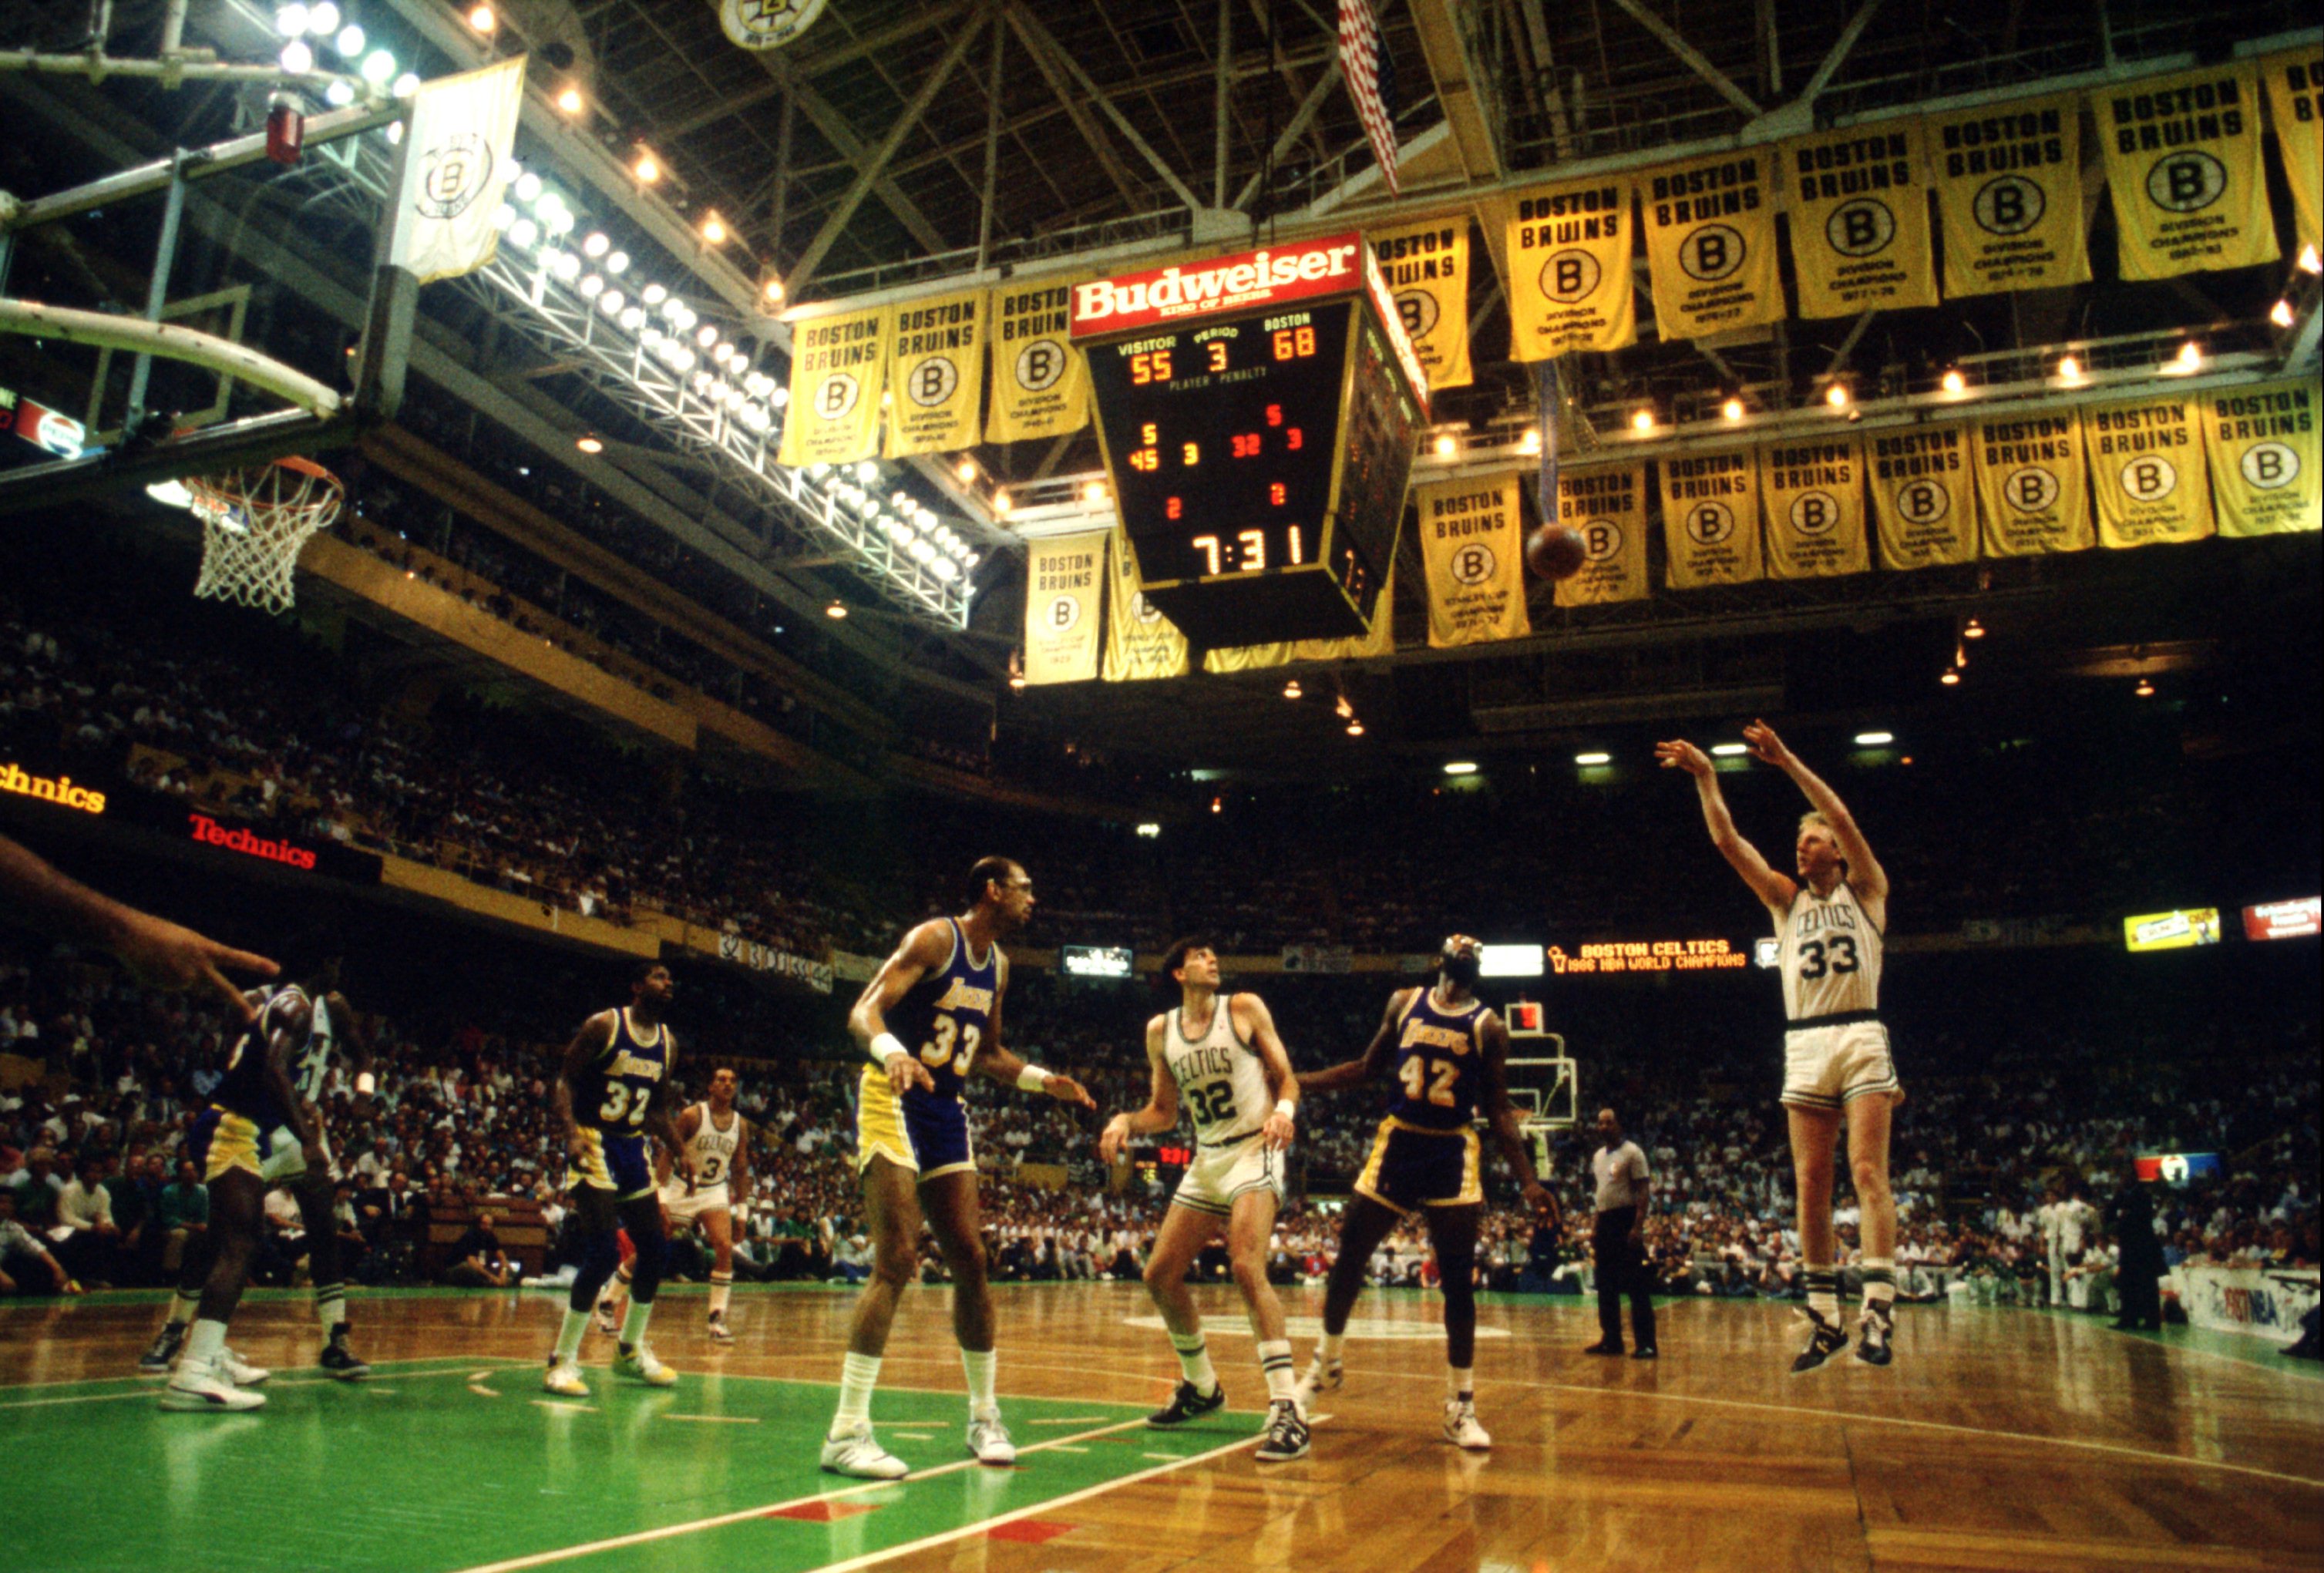 1986 Boston Celtics vs. New Jersey Nets Ticket Stub Art - Row One